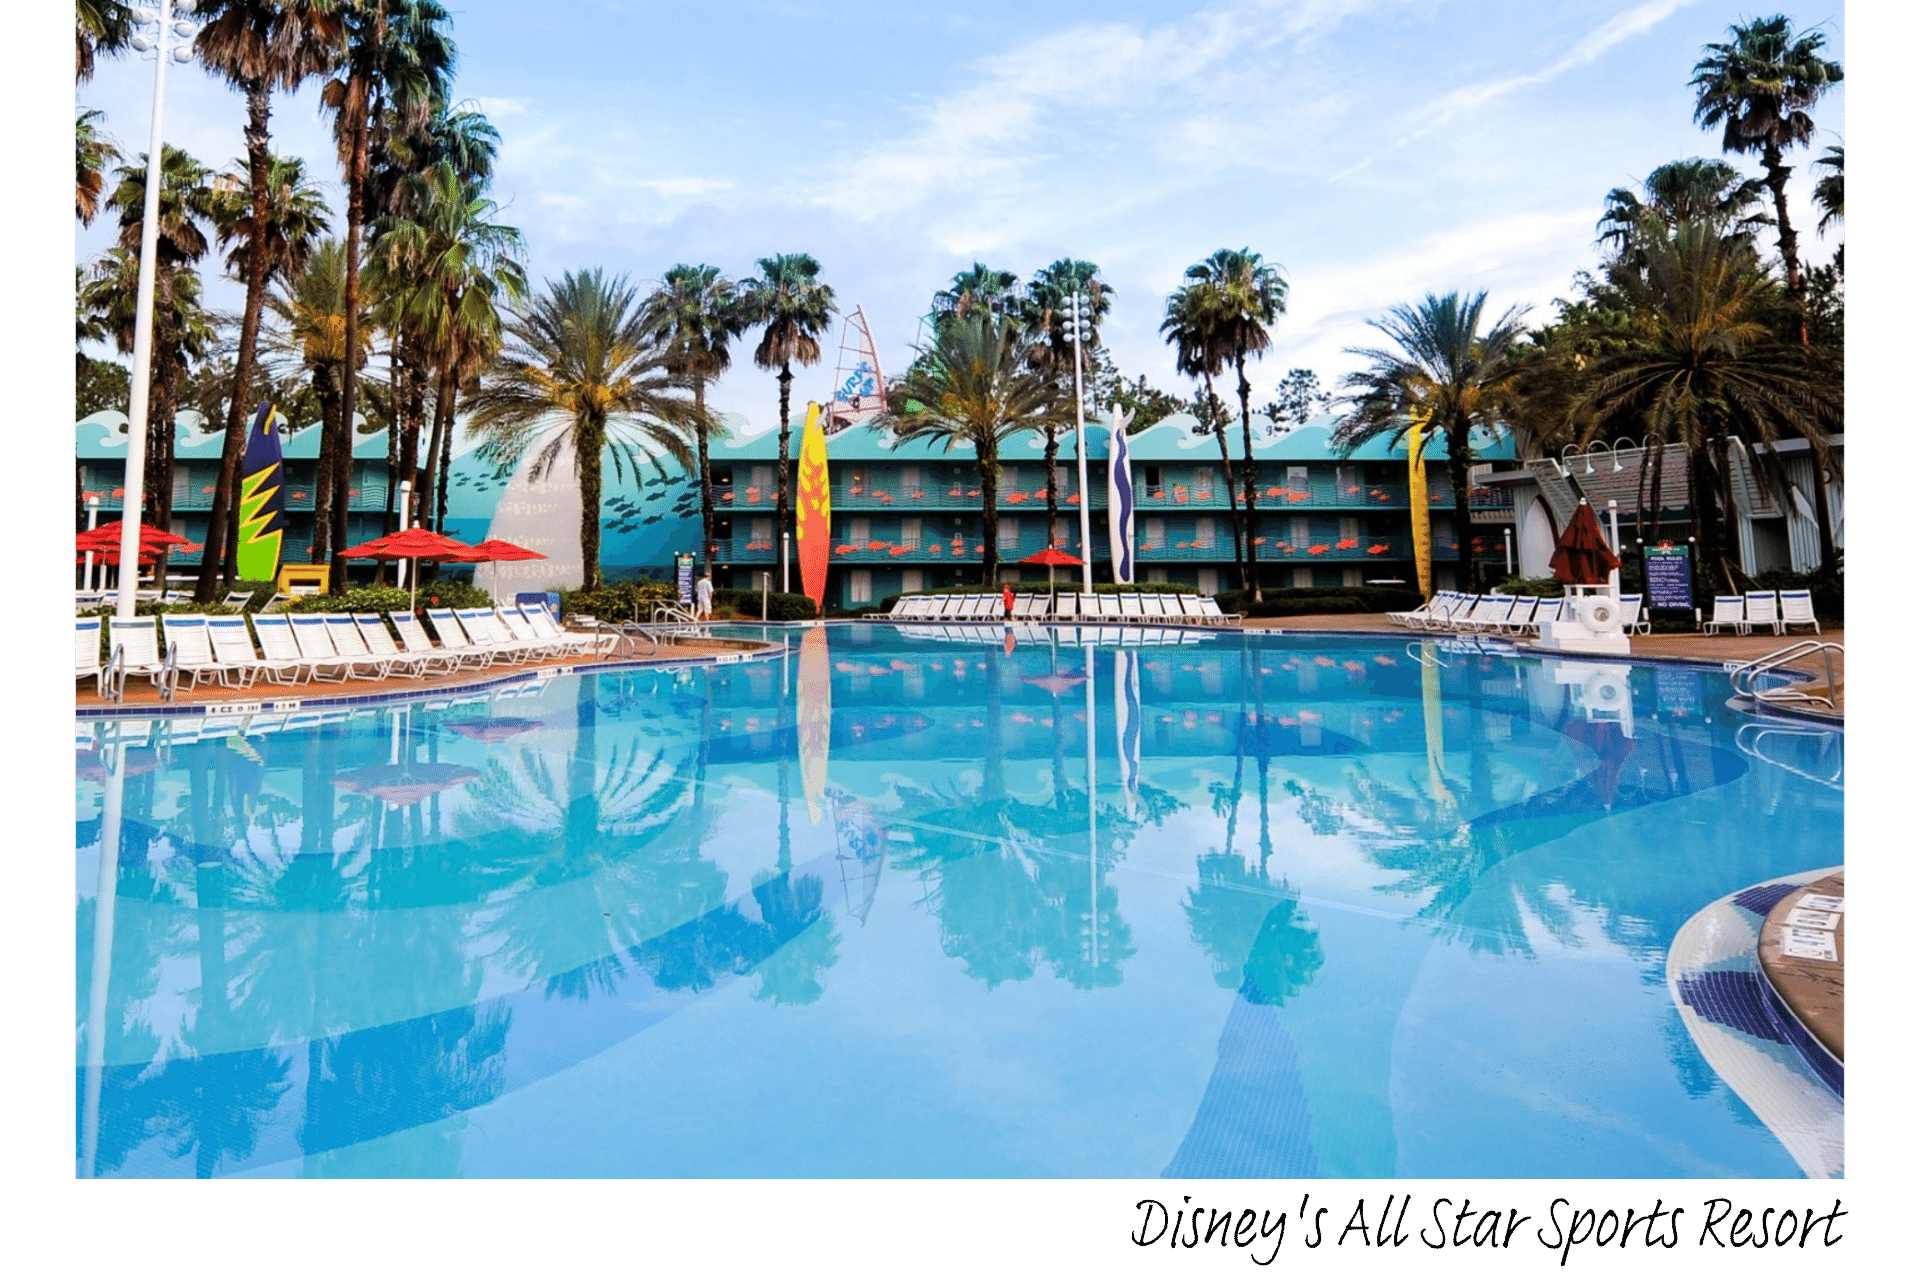 The pool at Disney's All Star Sports Resort, one of the Value Disney resorts at Walt Disney World Resort, Florida.